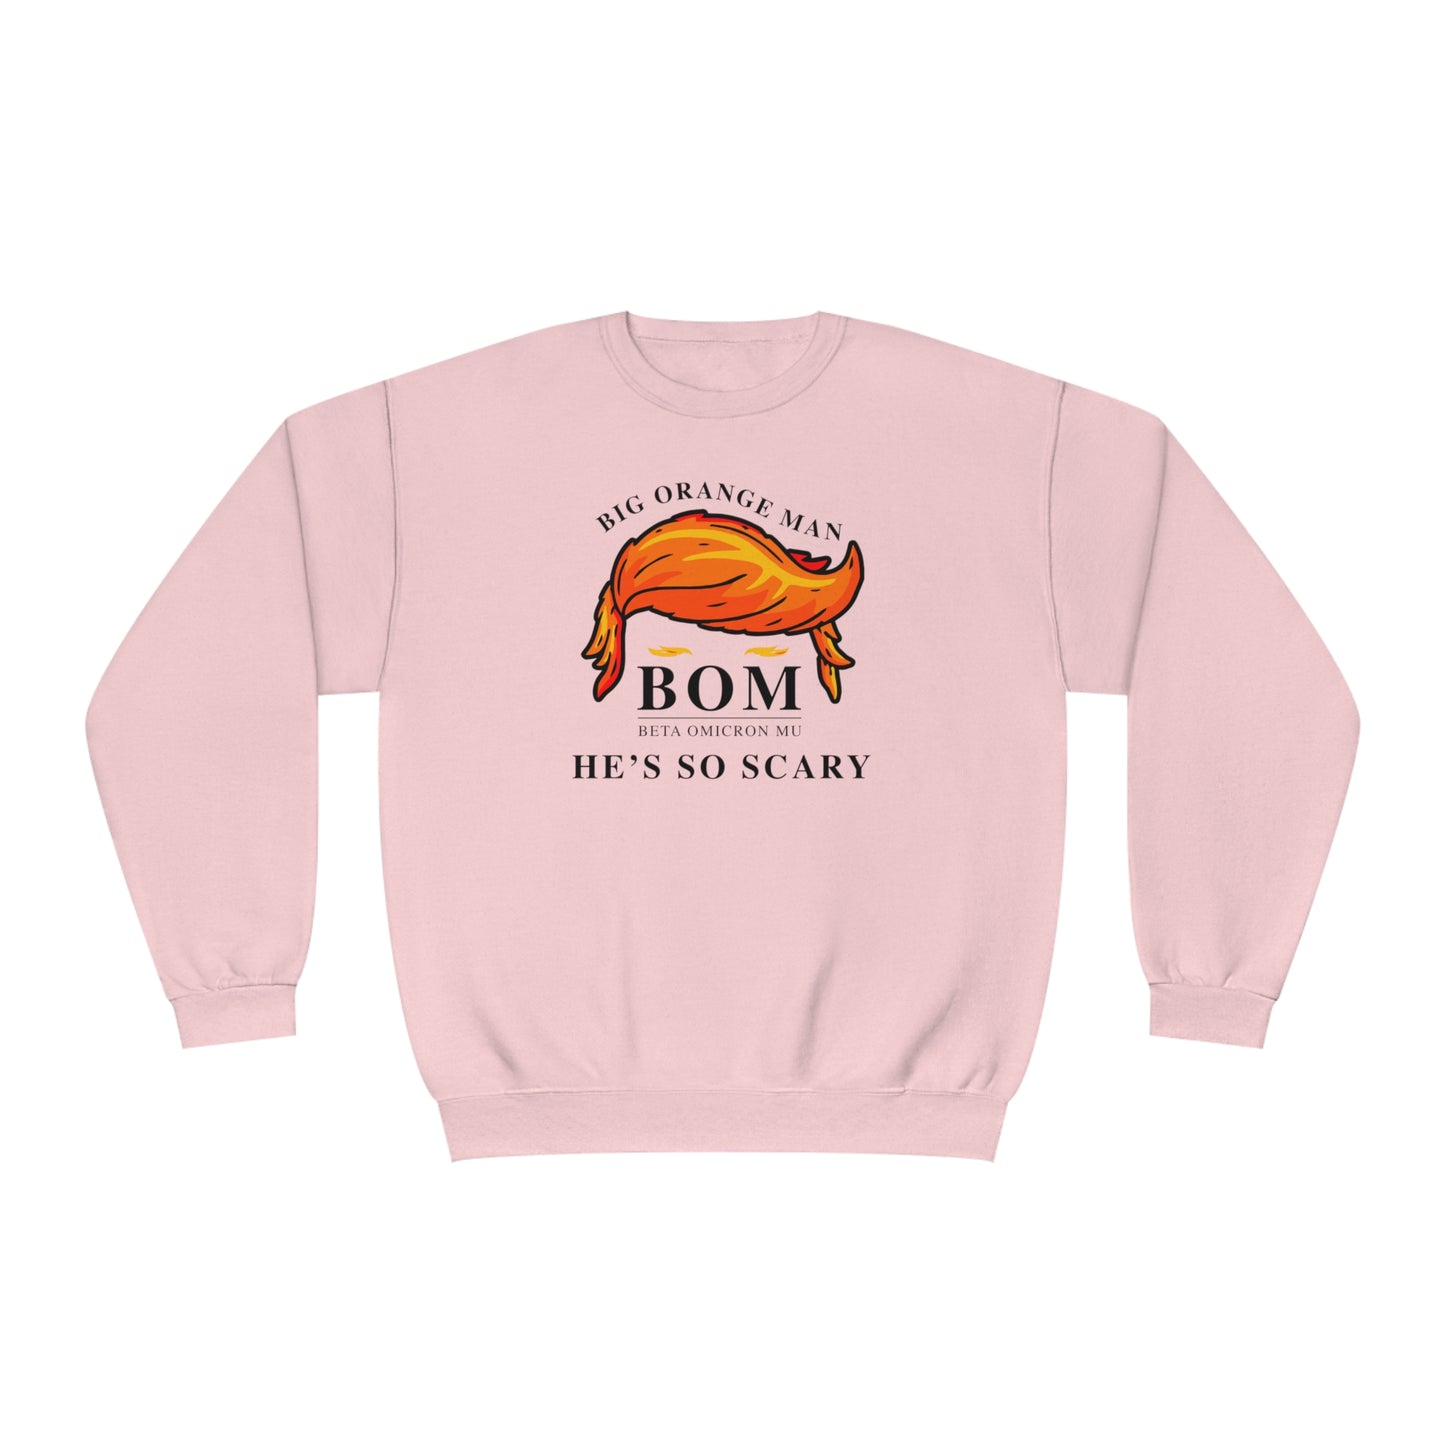 BOM - Big Orange Man Sweatshirt